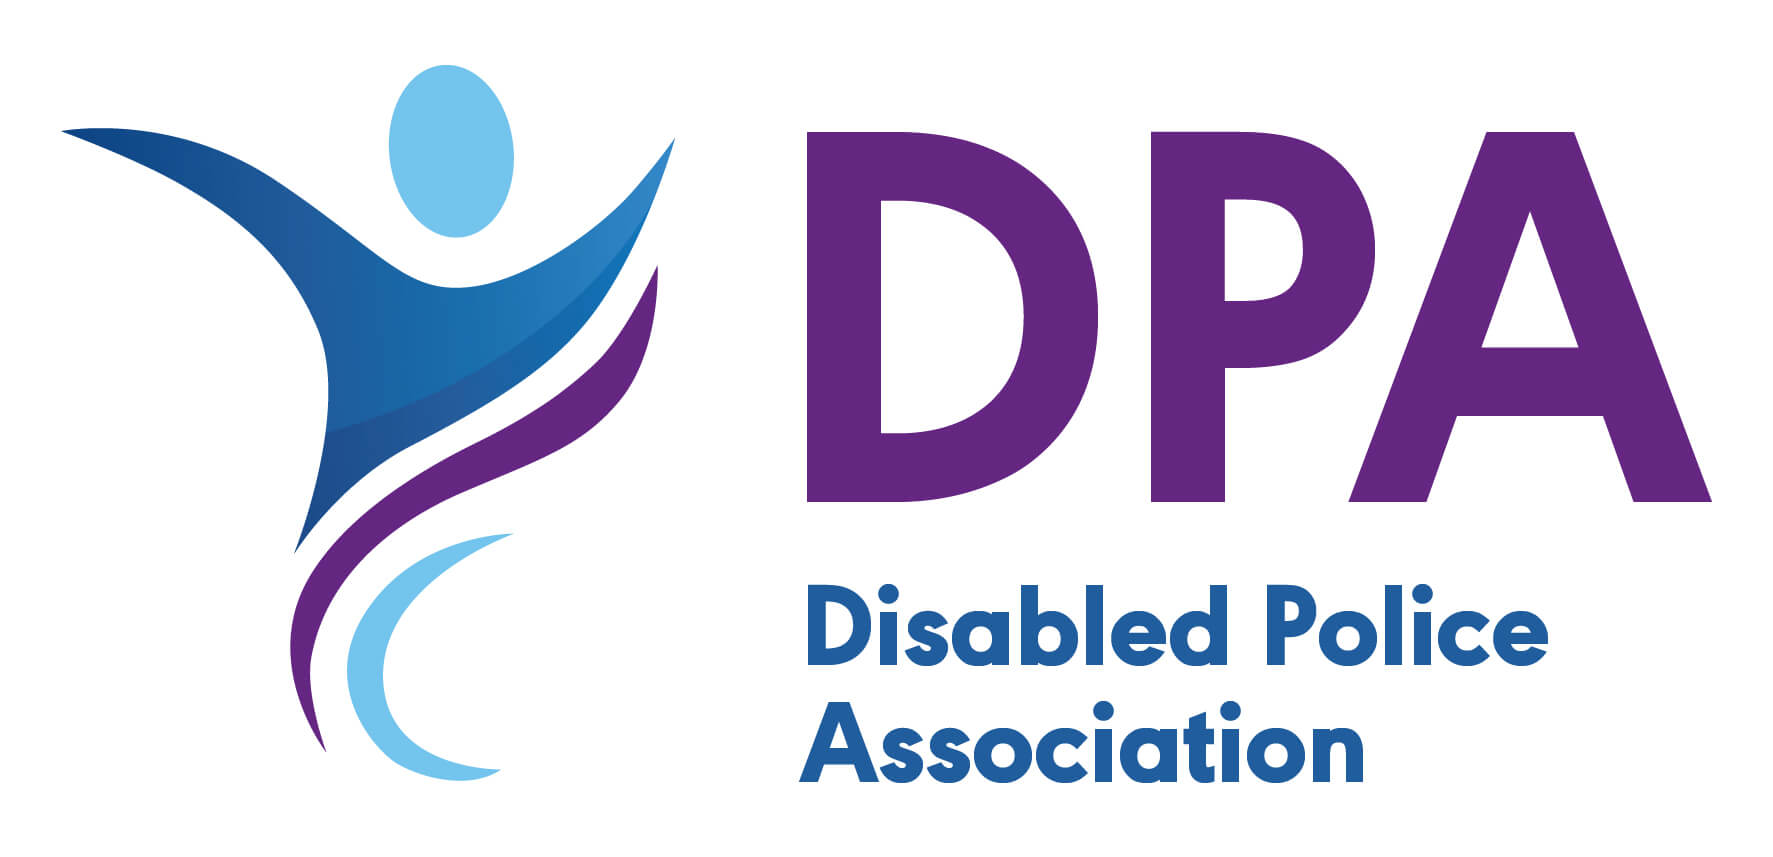 Disabled Police Association logo